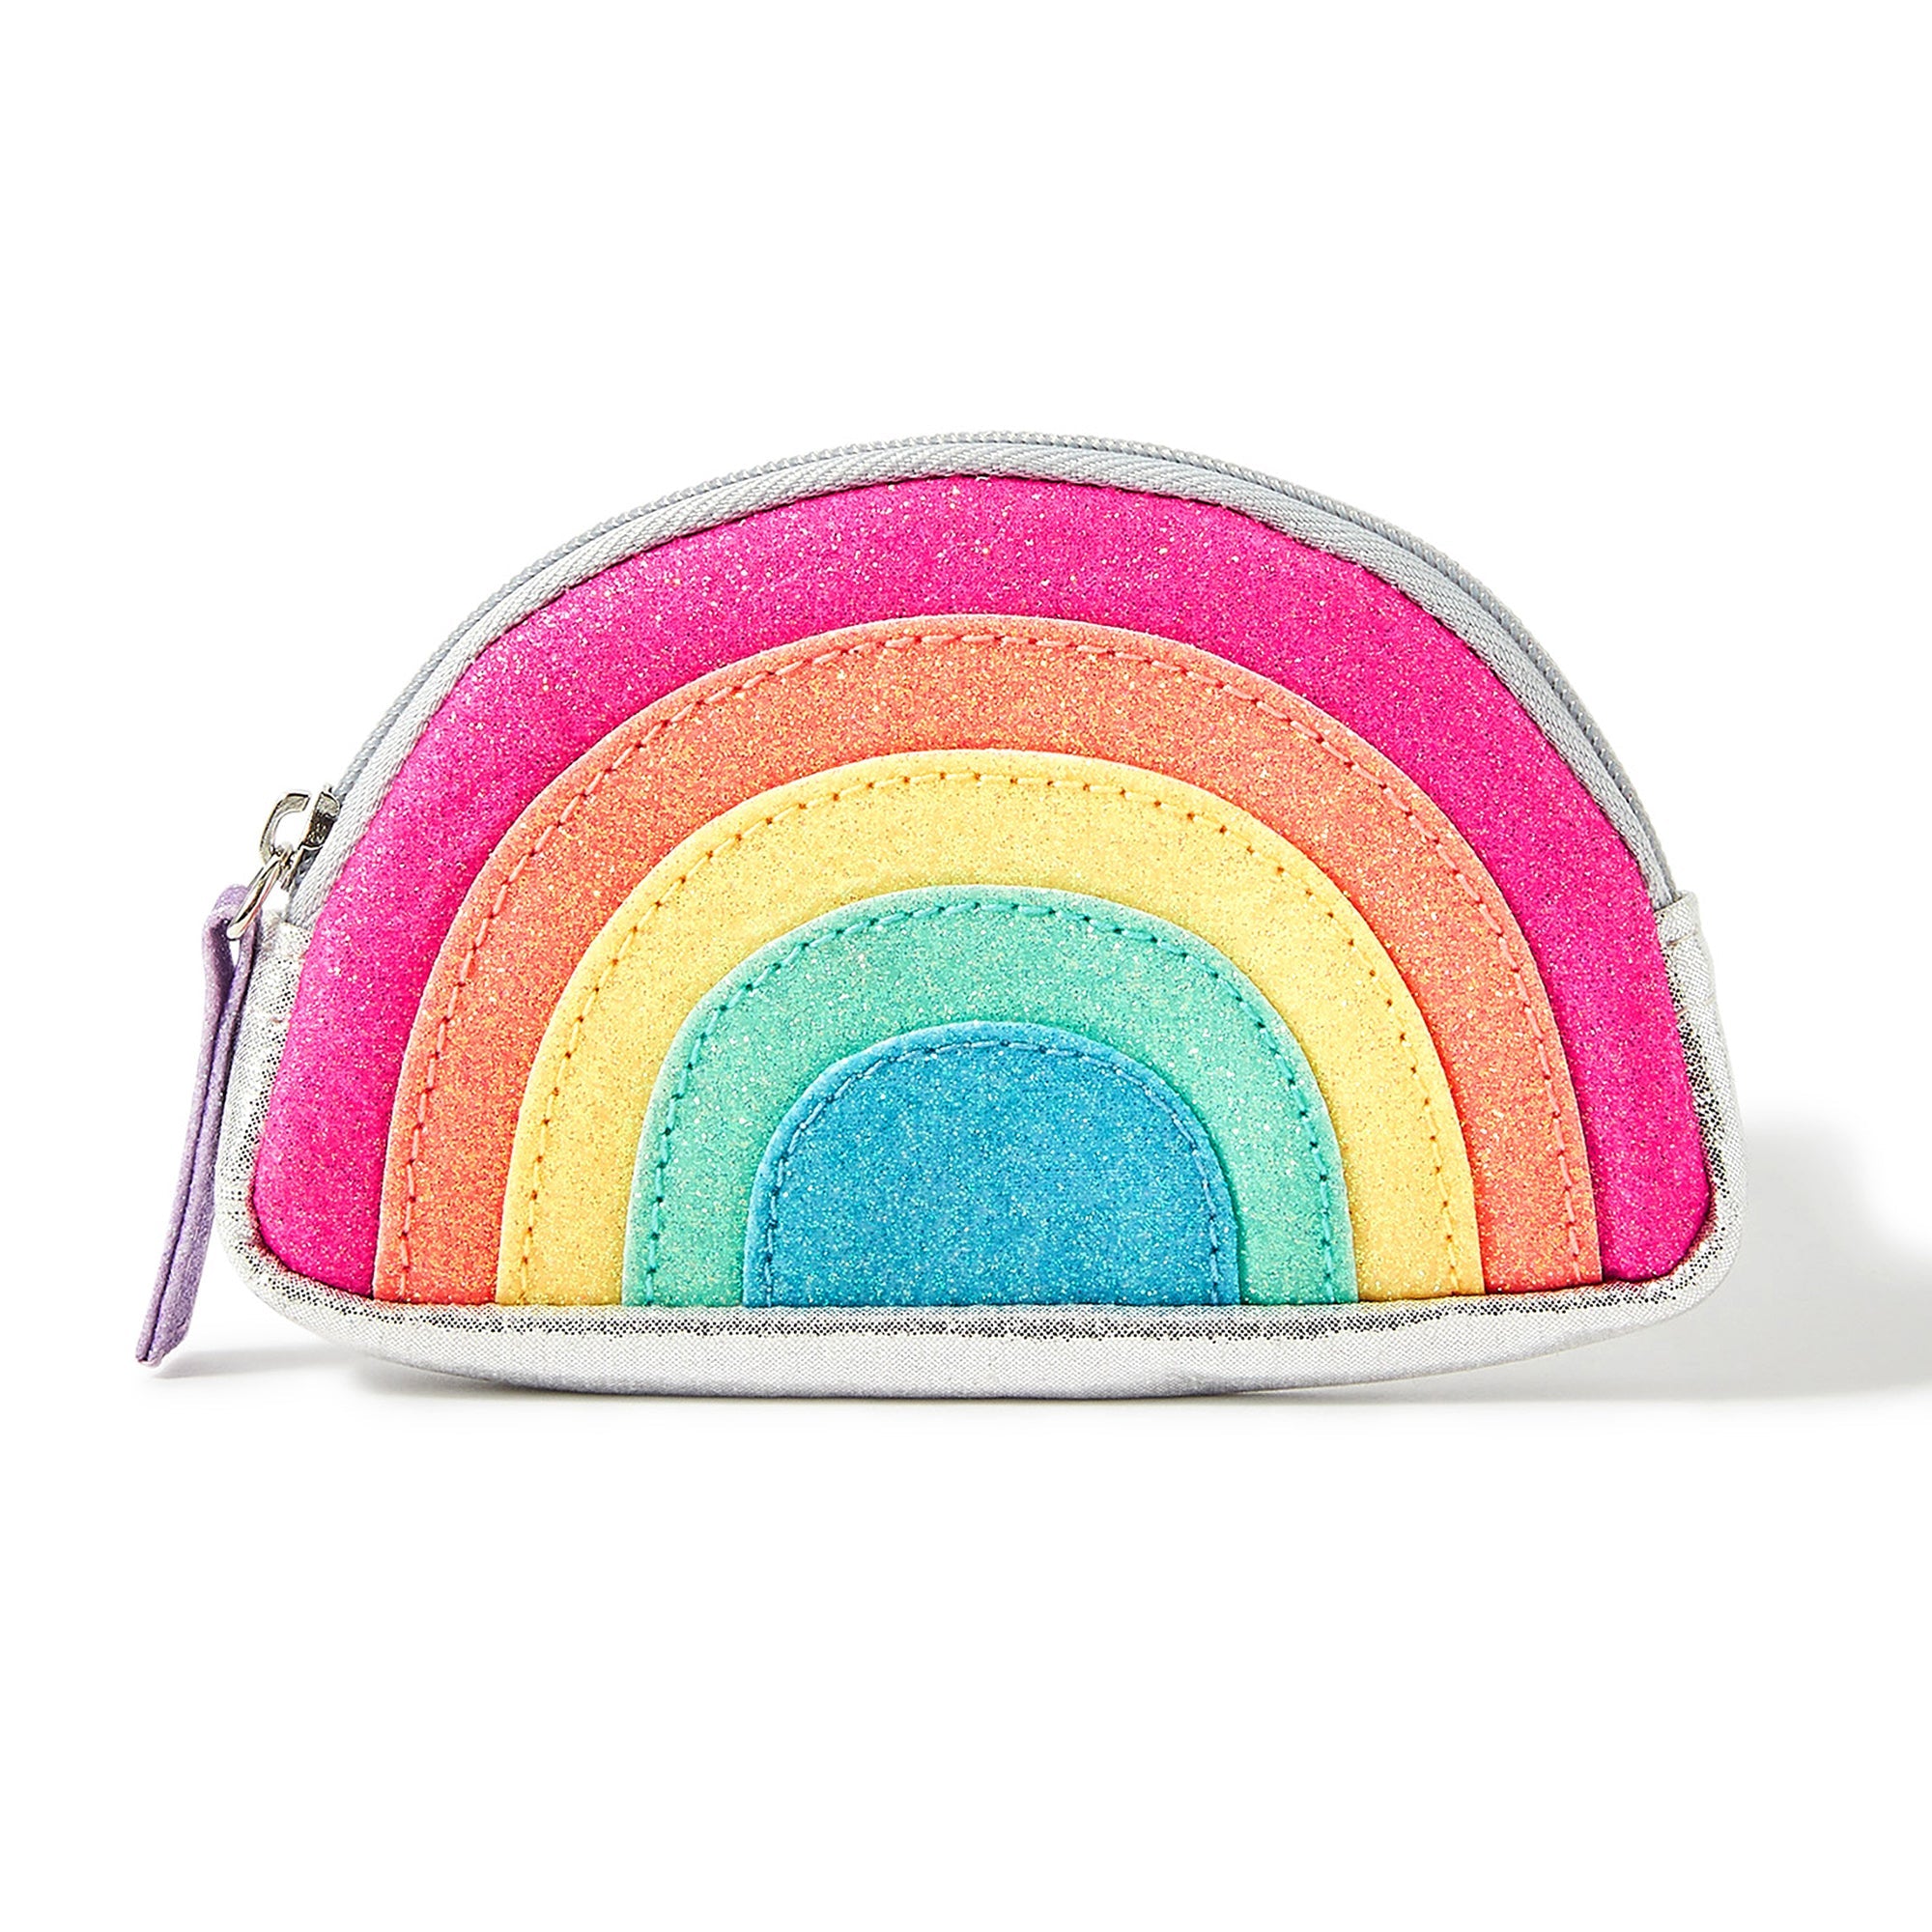 Accessorize London Girl's Rainbow Purse Bag